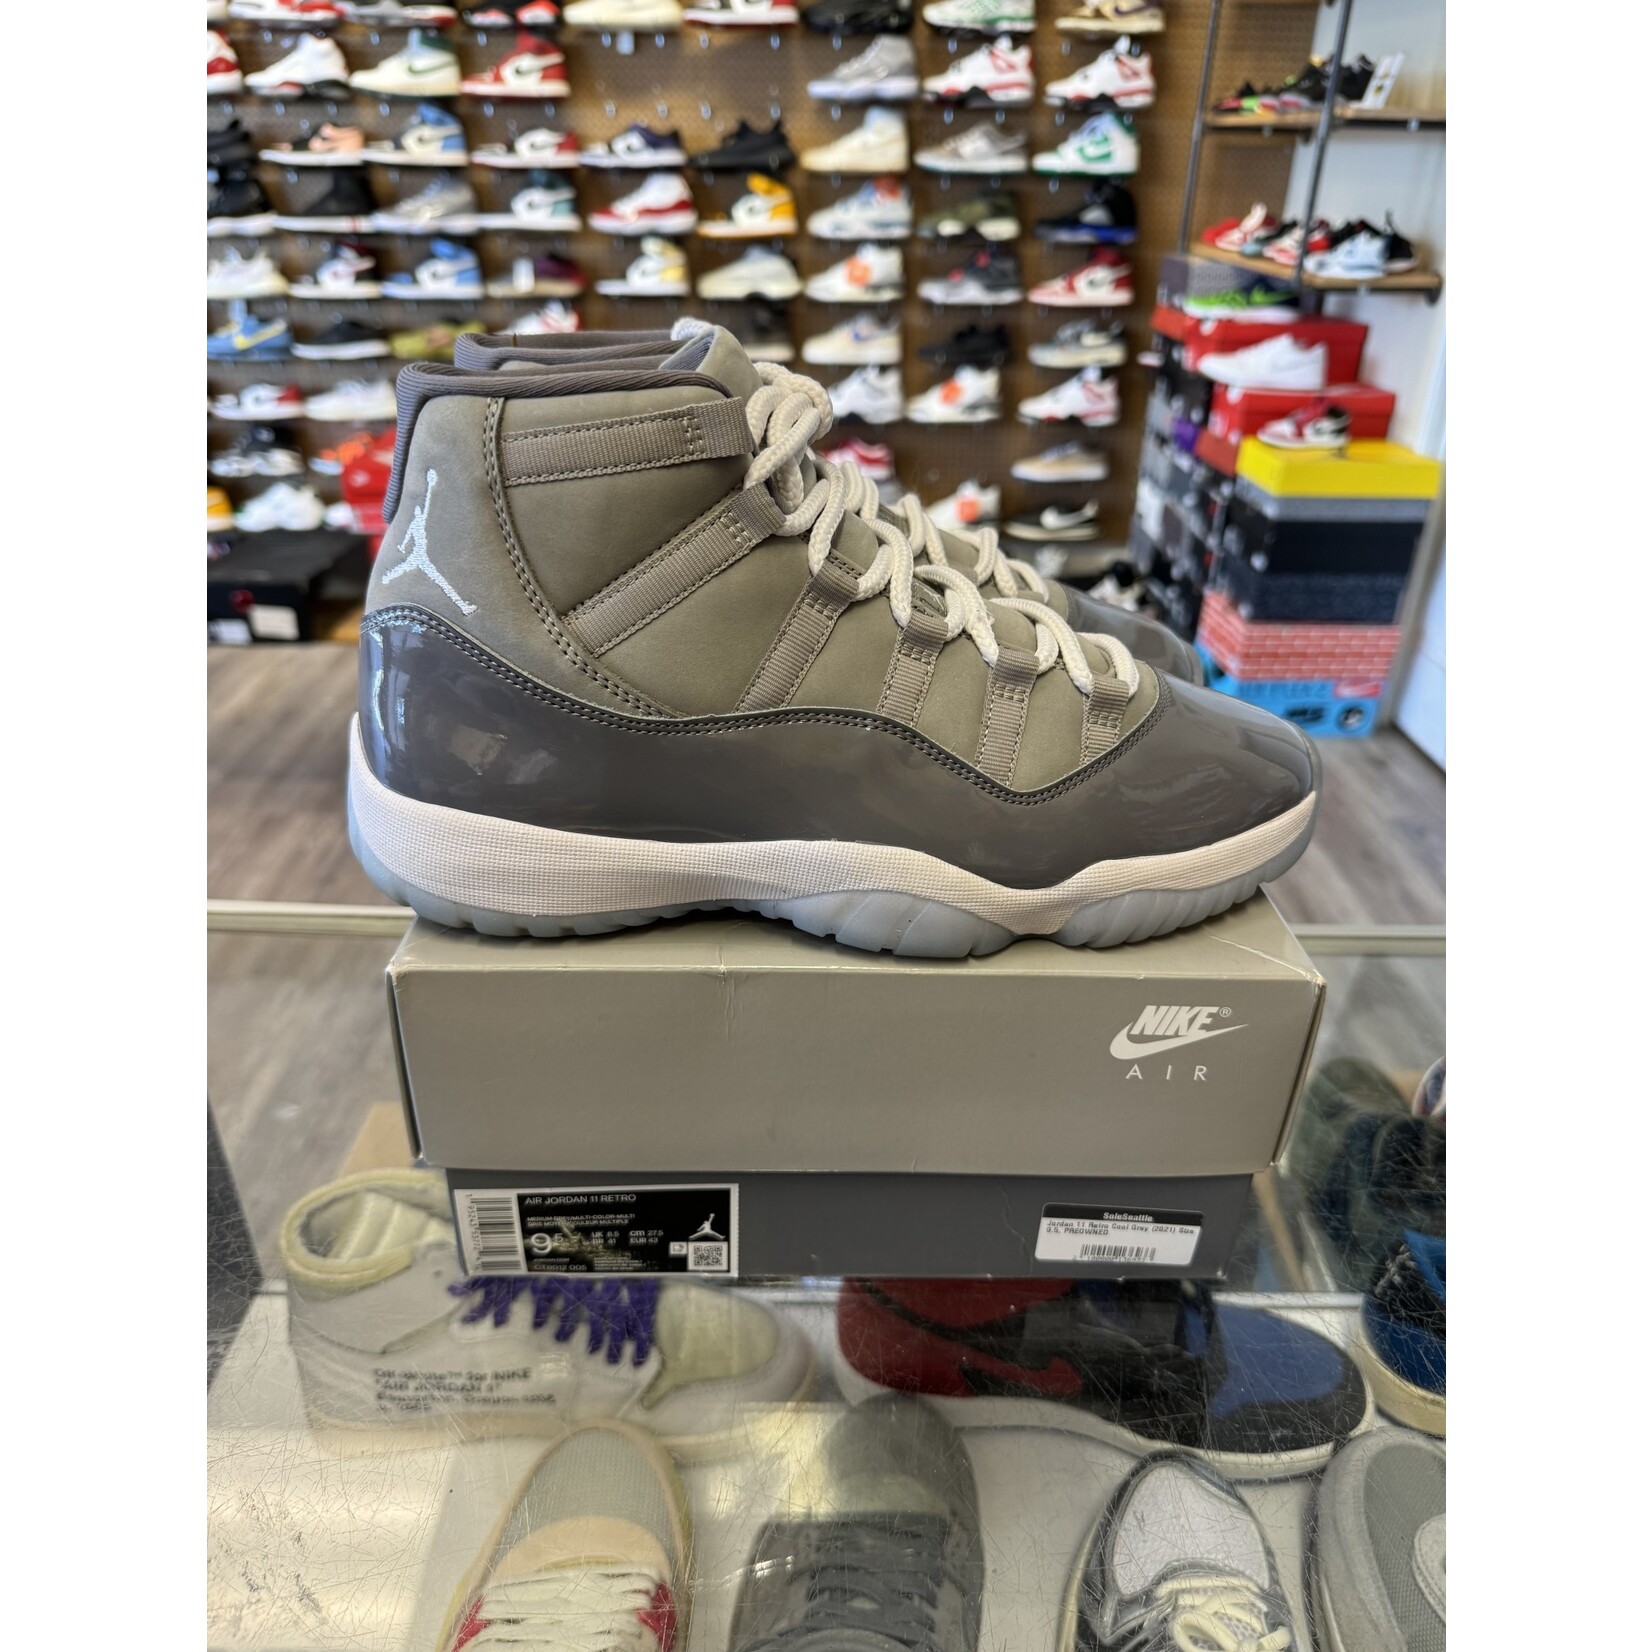 Jordan Jordan 11 Retro Cool Grey (2021) Size 9.5, PREOWNED